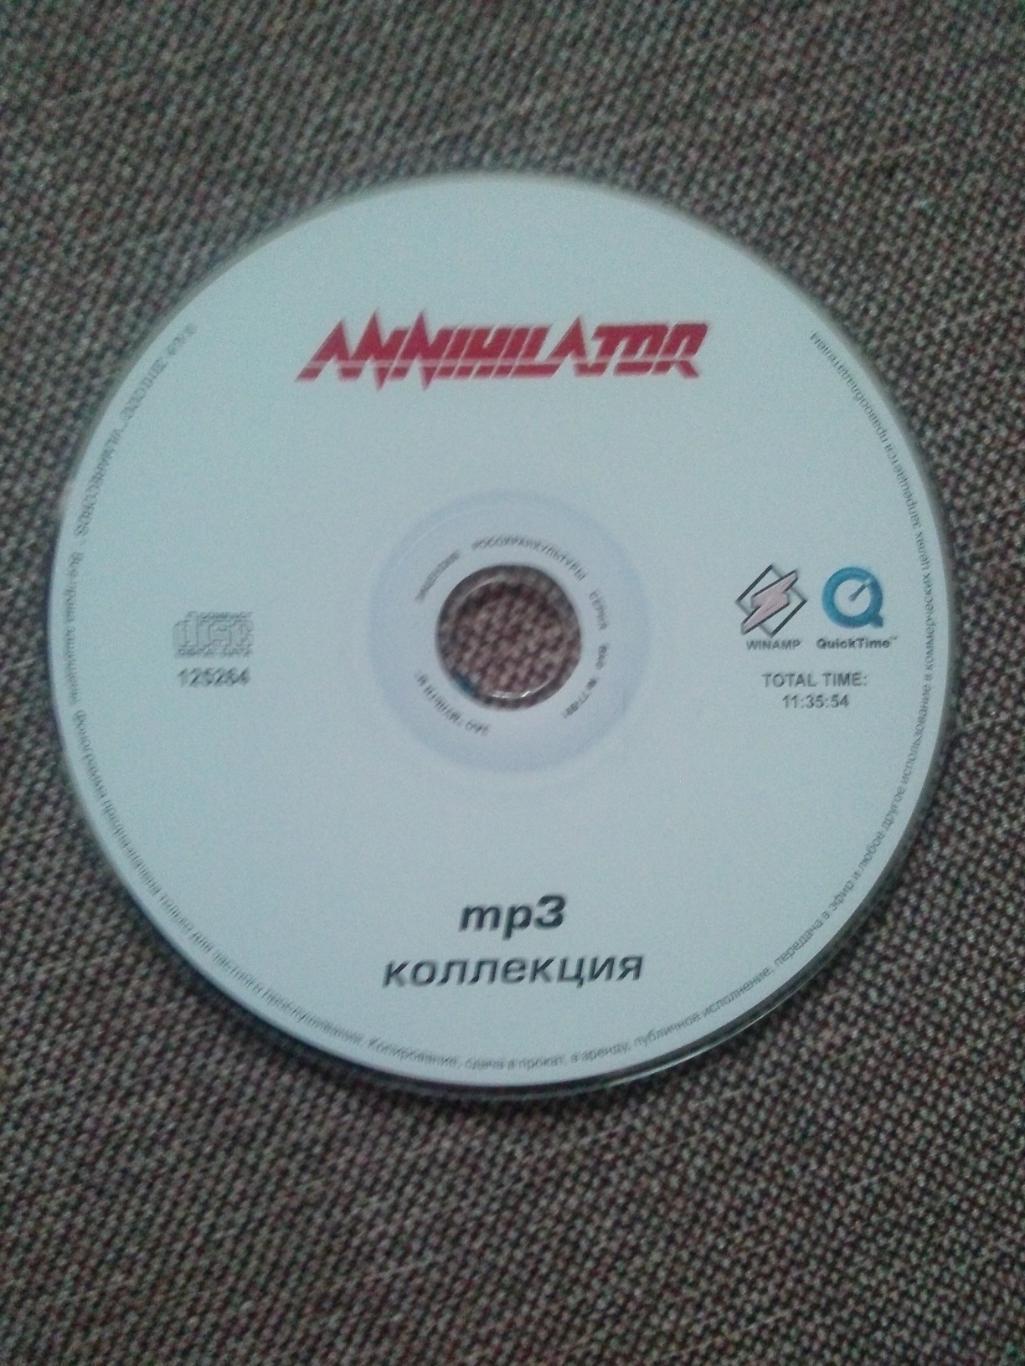 MP - 3 CD : группа Annihilator 1989 - 2007 гг. (13 альбомов) Thrash metal Рок 4